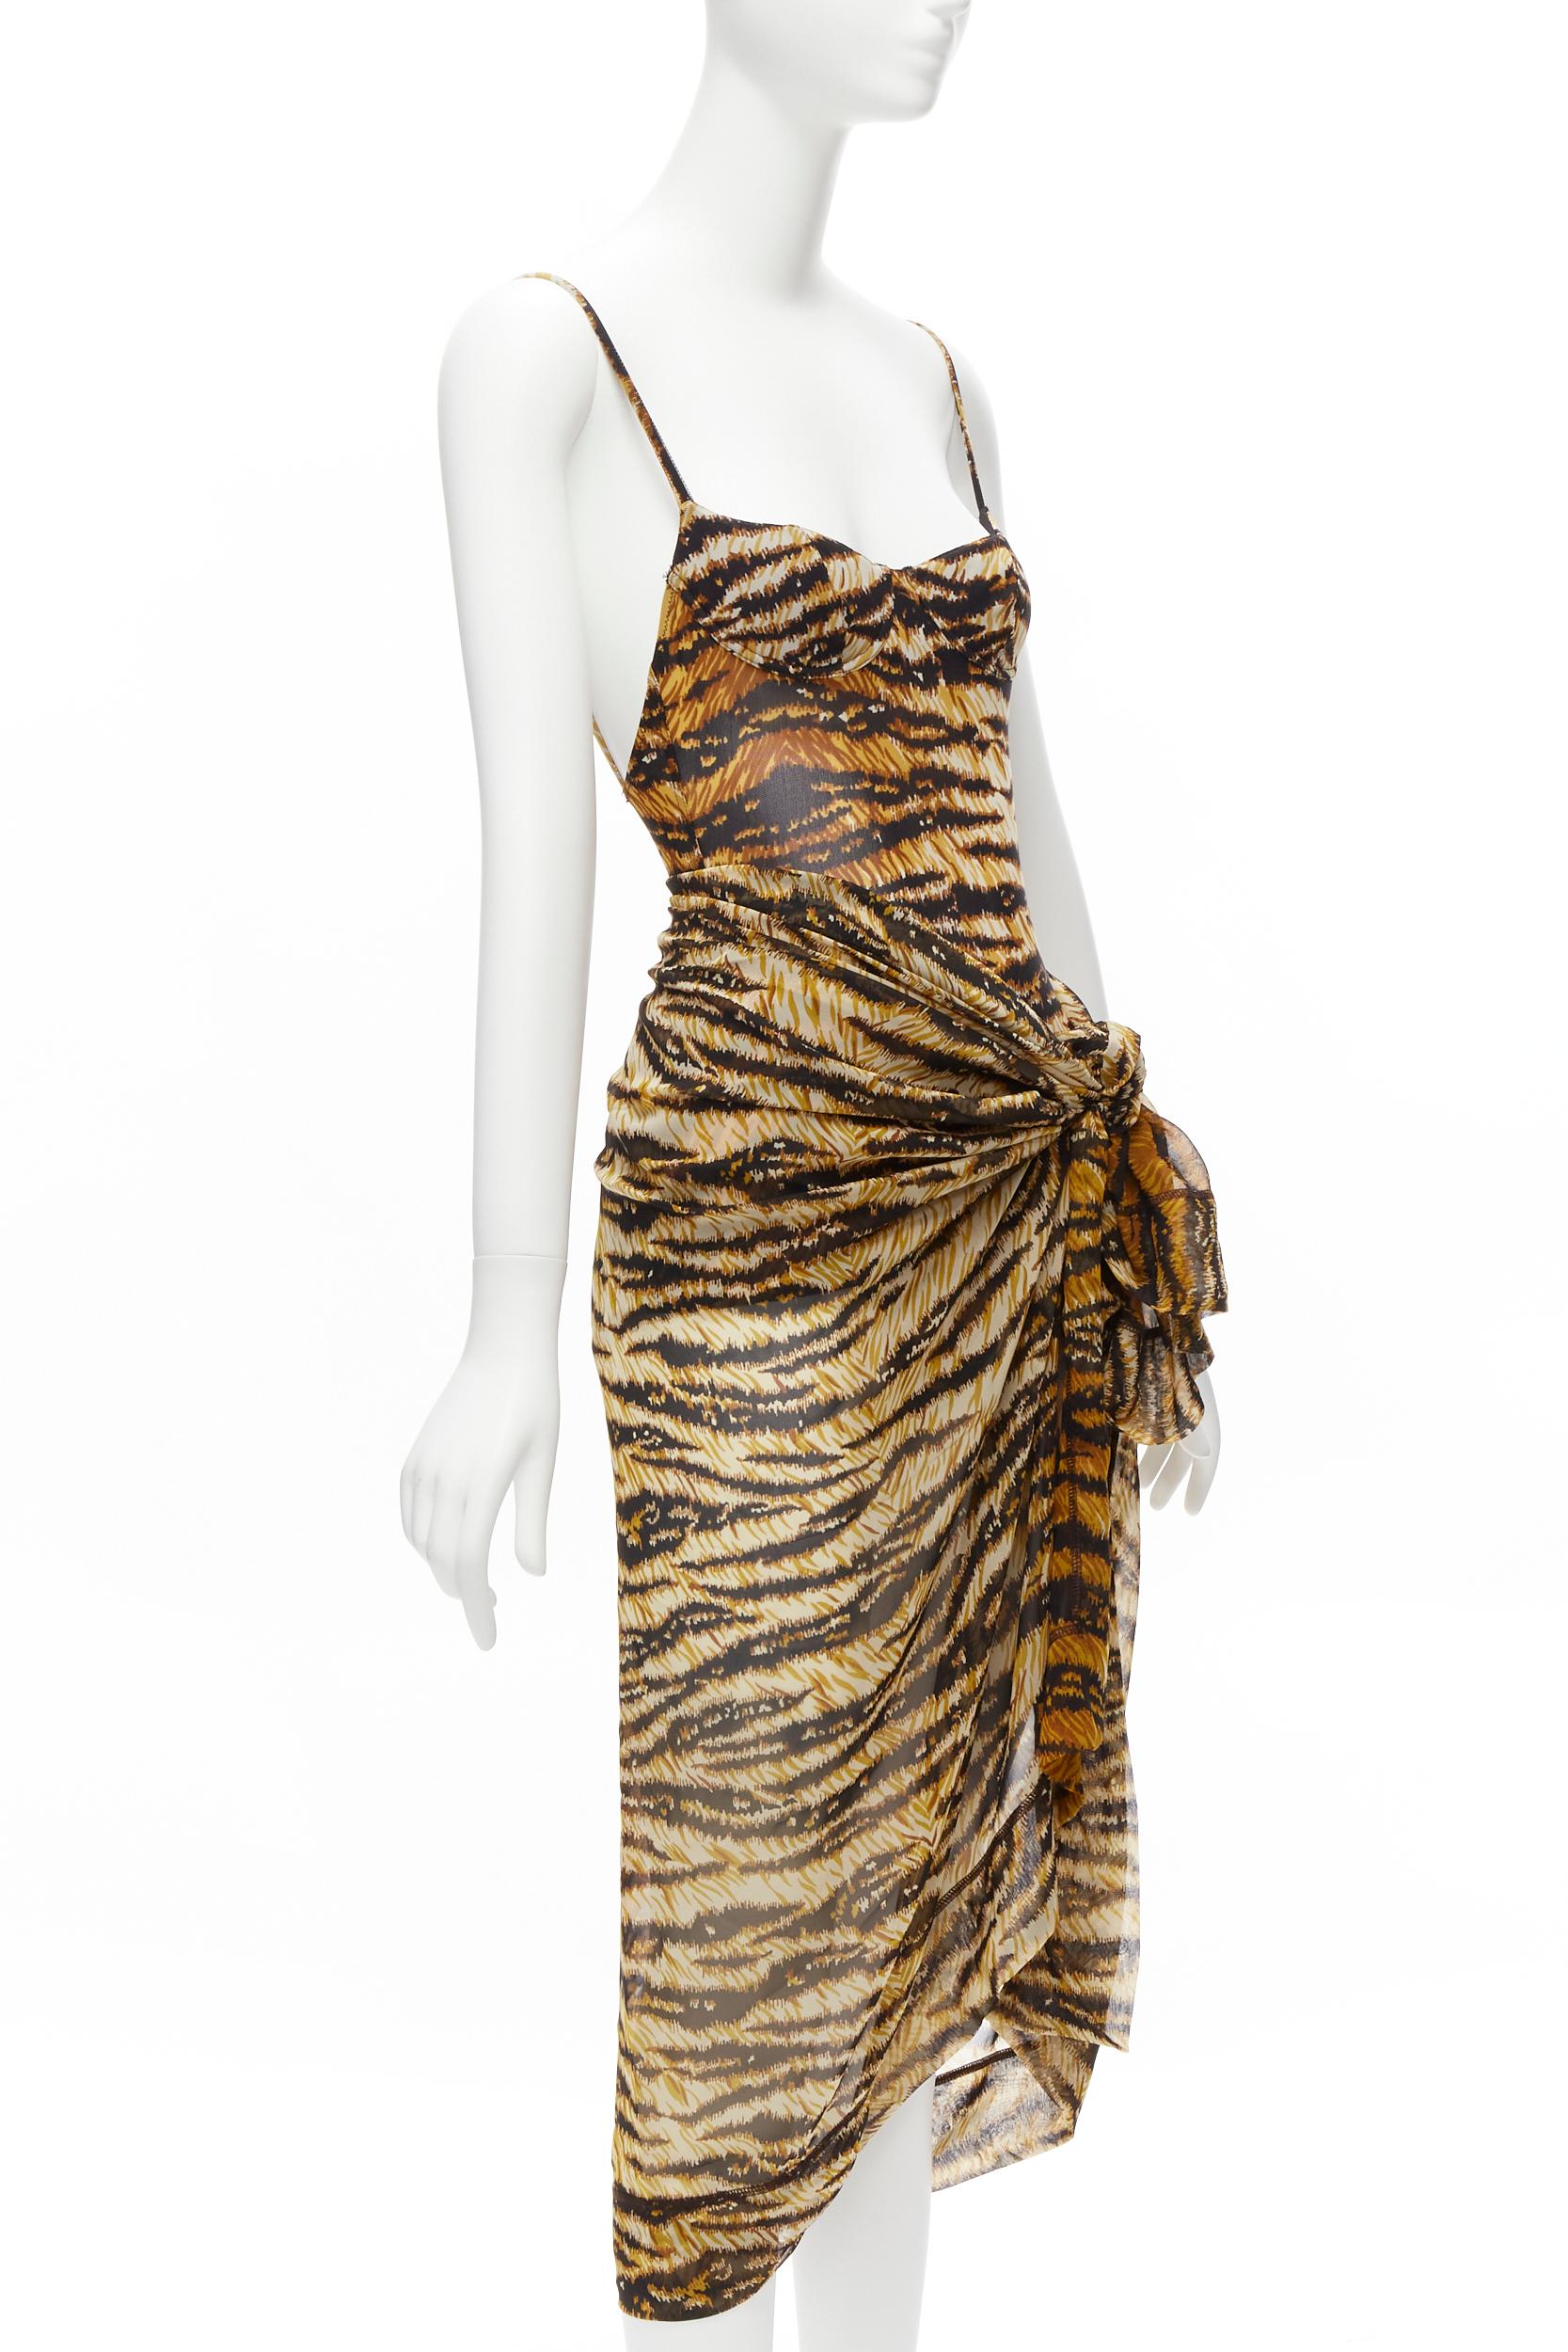 DOLCE GABBANA MARE Vintage tiger print mesh bustier bodysuit wrap skirt scarf S 5